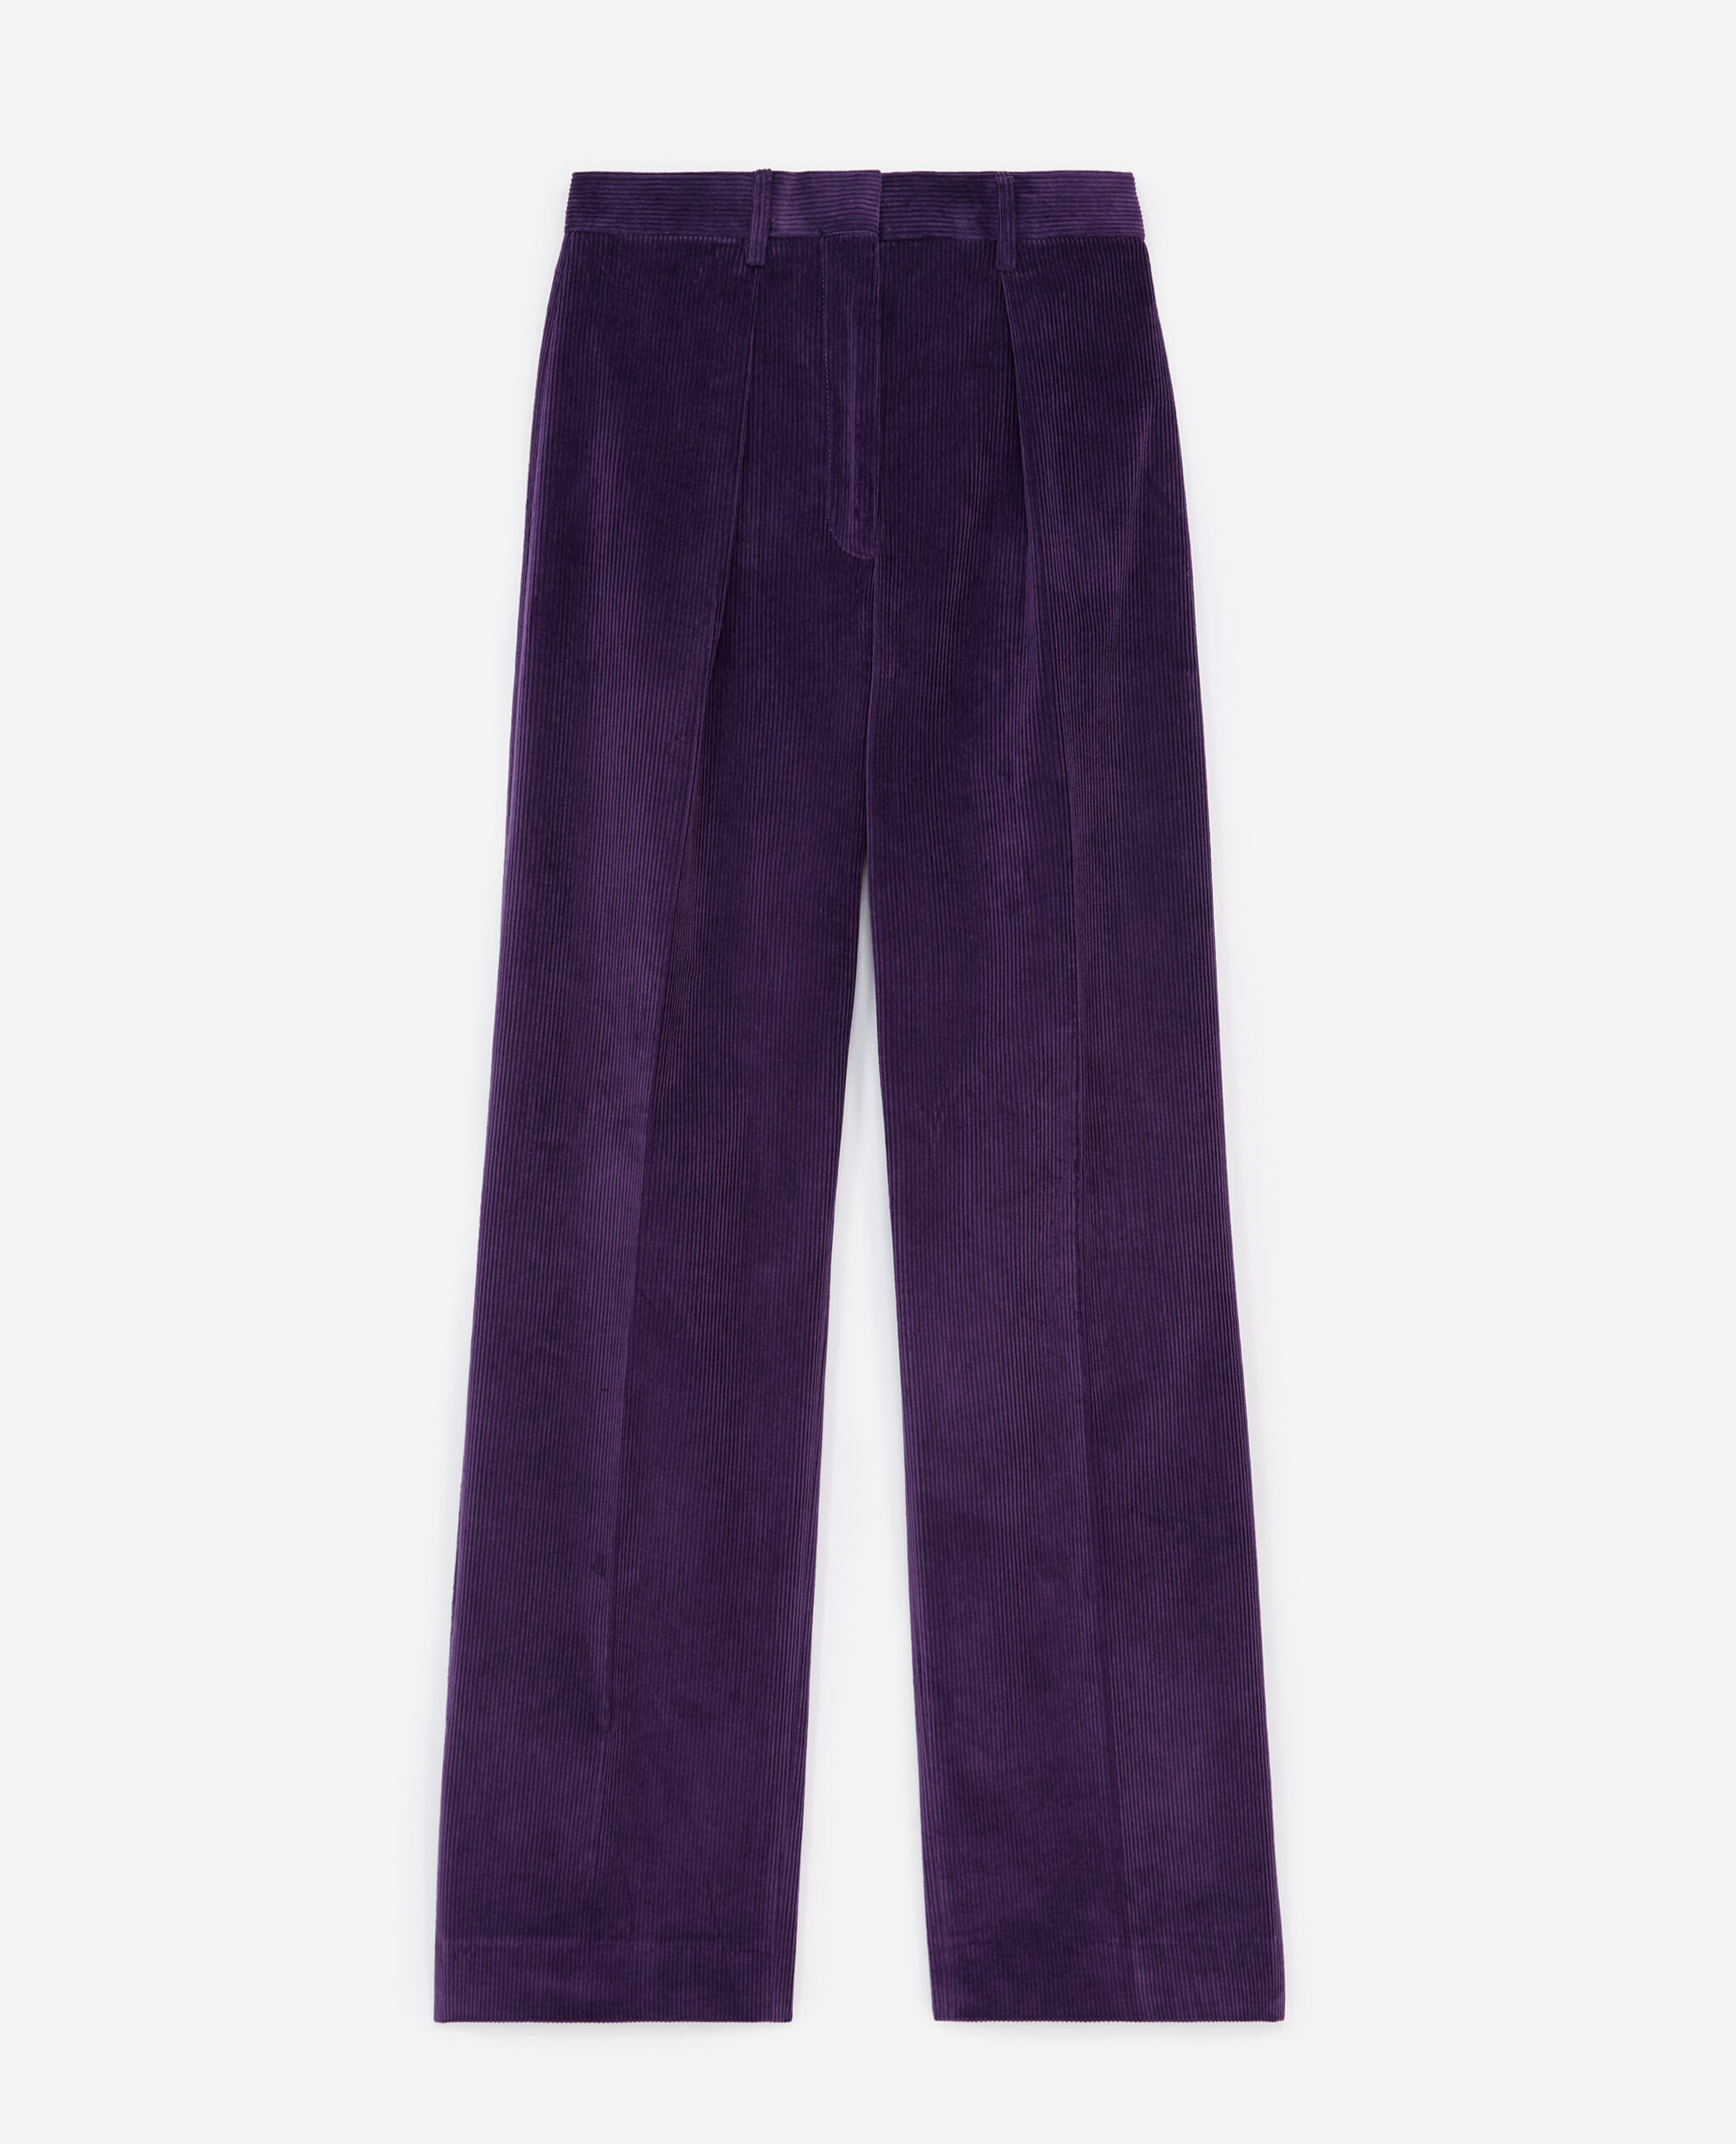 Basic Editions Womens STRETCH Corduroy Pants SZ 16 36 W 28 Inseam Purple  Berry